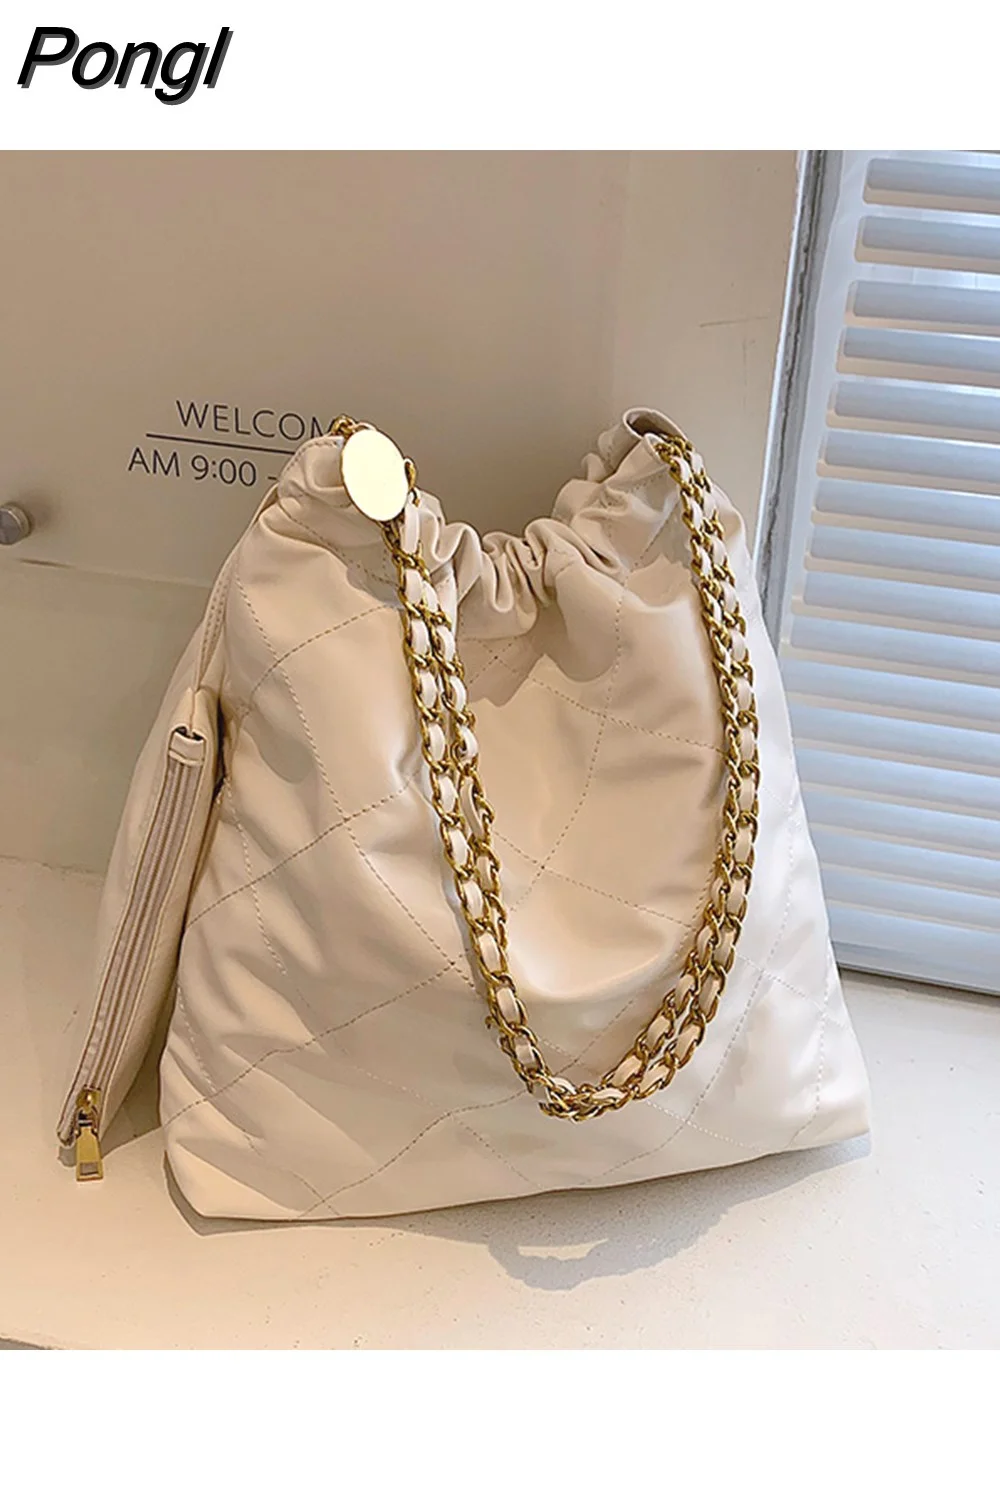 Pongl Women Bag Luxury Designer Handbag Large Capacity Composite Bag Female Shoulder Bags High Quality Fashion Pack Sac A Main Femme